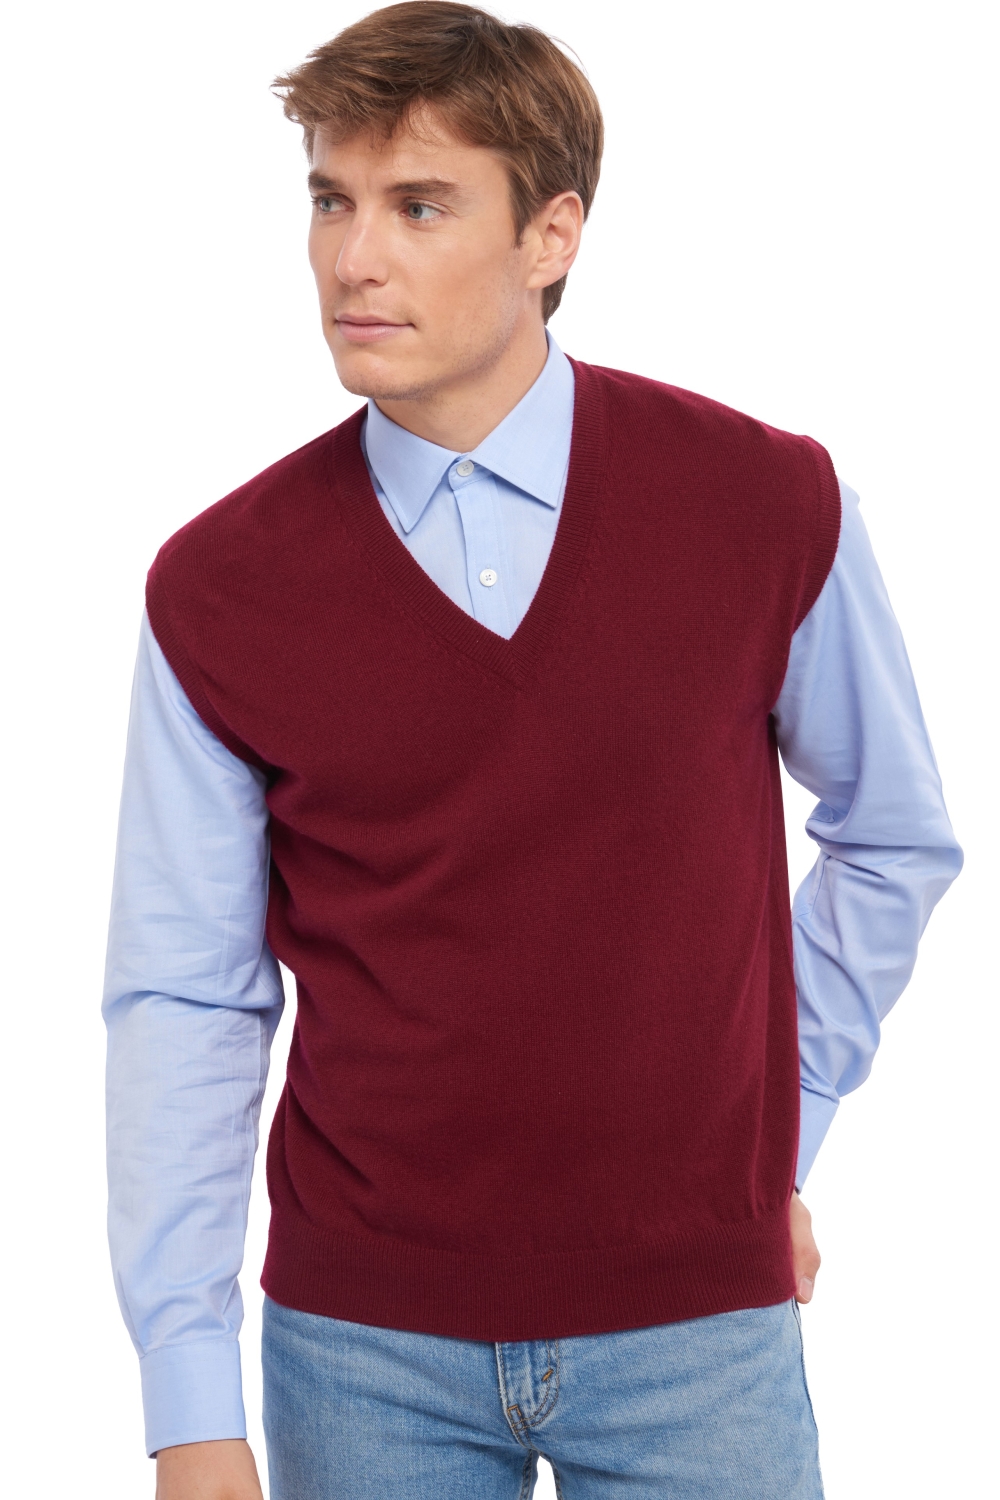 Cashmere men waistcoat sleeveless sweaters balthazar bordeaux 2xl